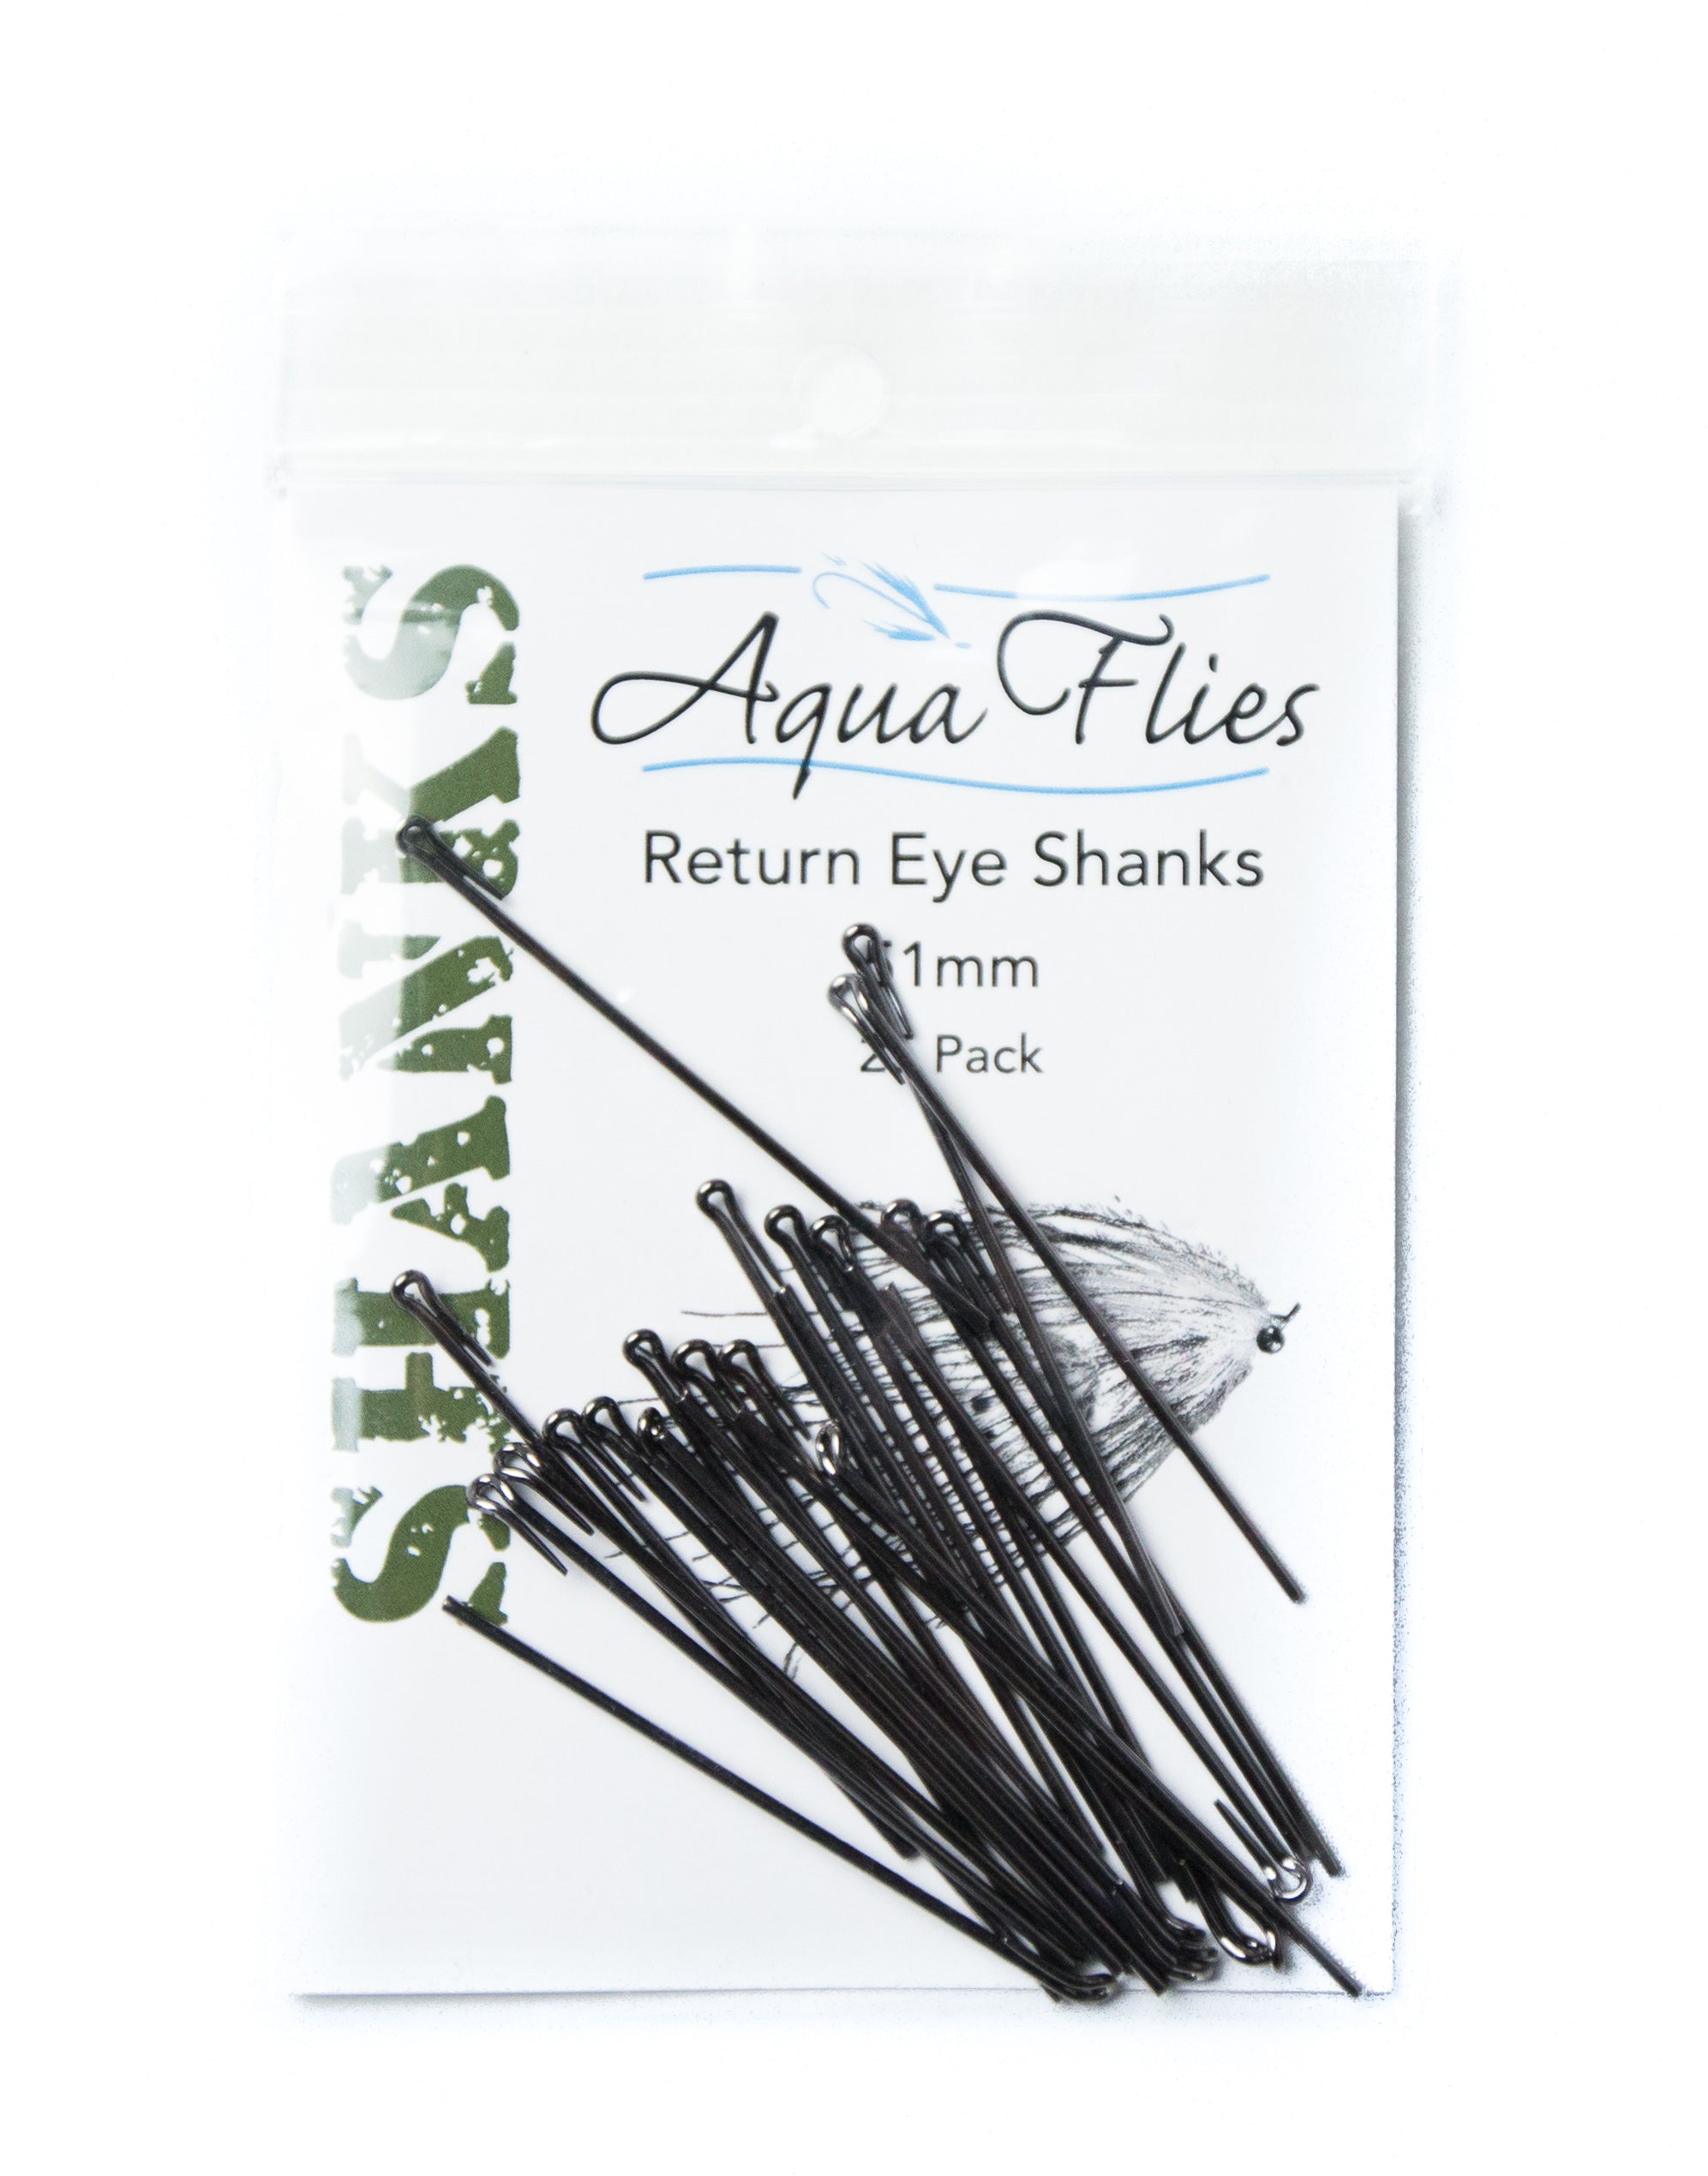 Aquaflies Return Eye Shanks